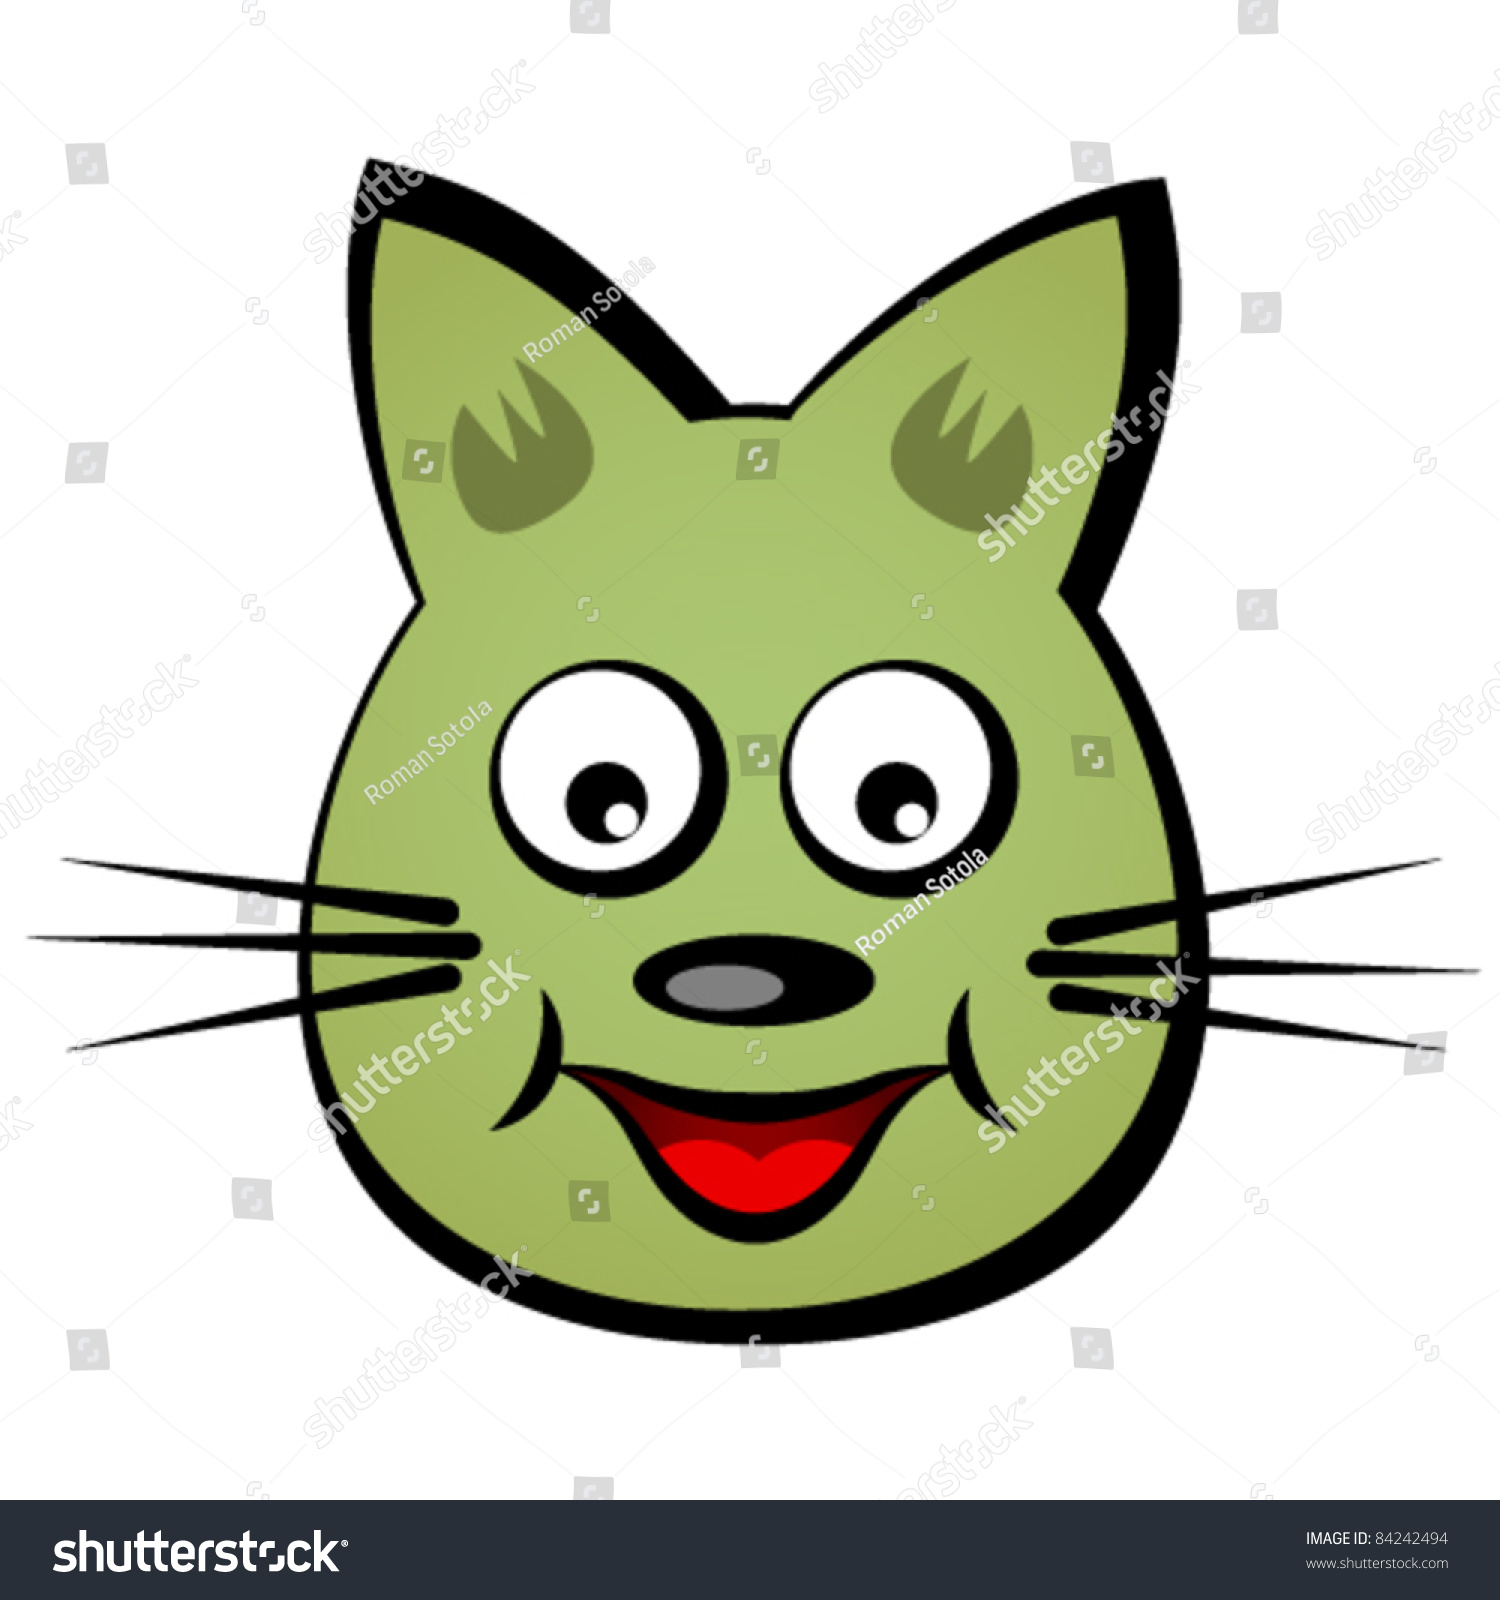 Vector Cartoon Smiling Face Cat - 84242494 : Shutterstock